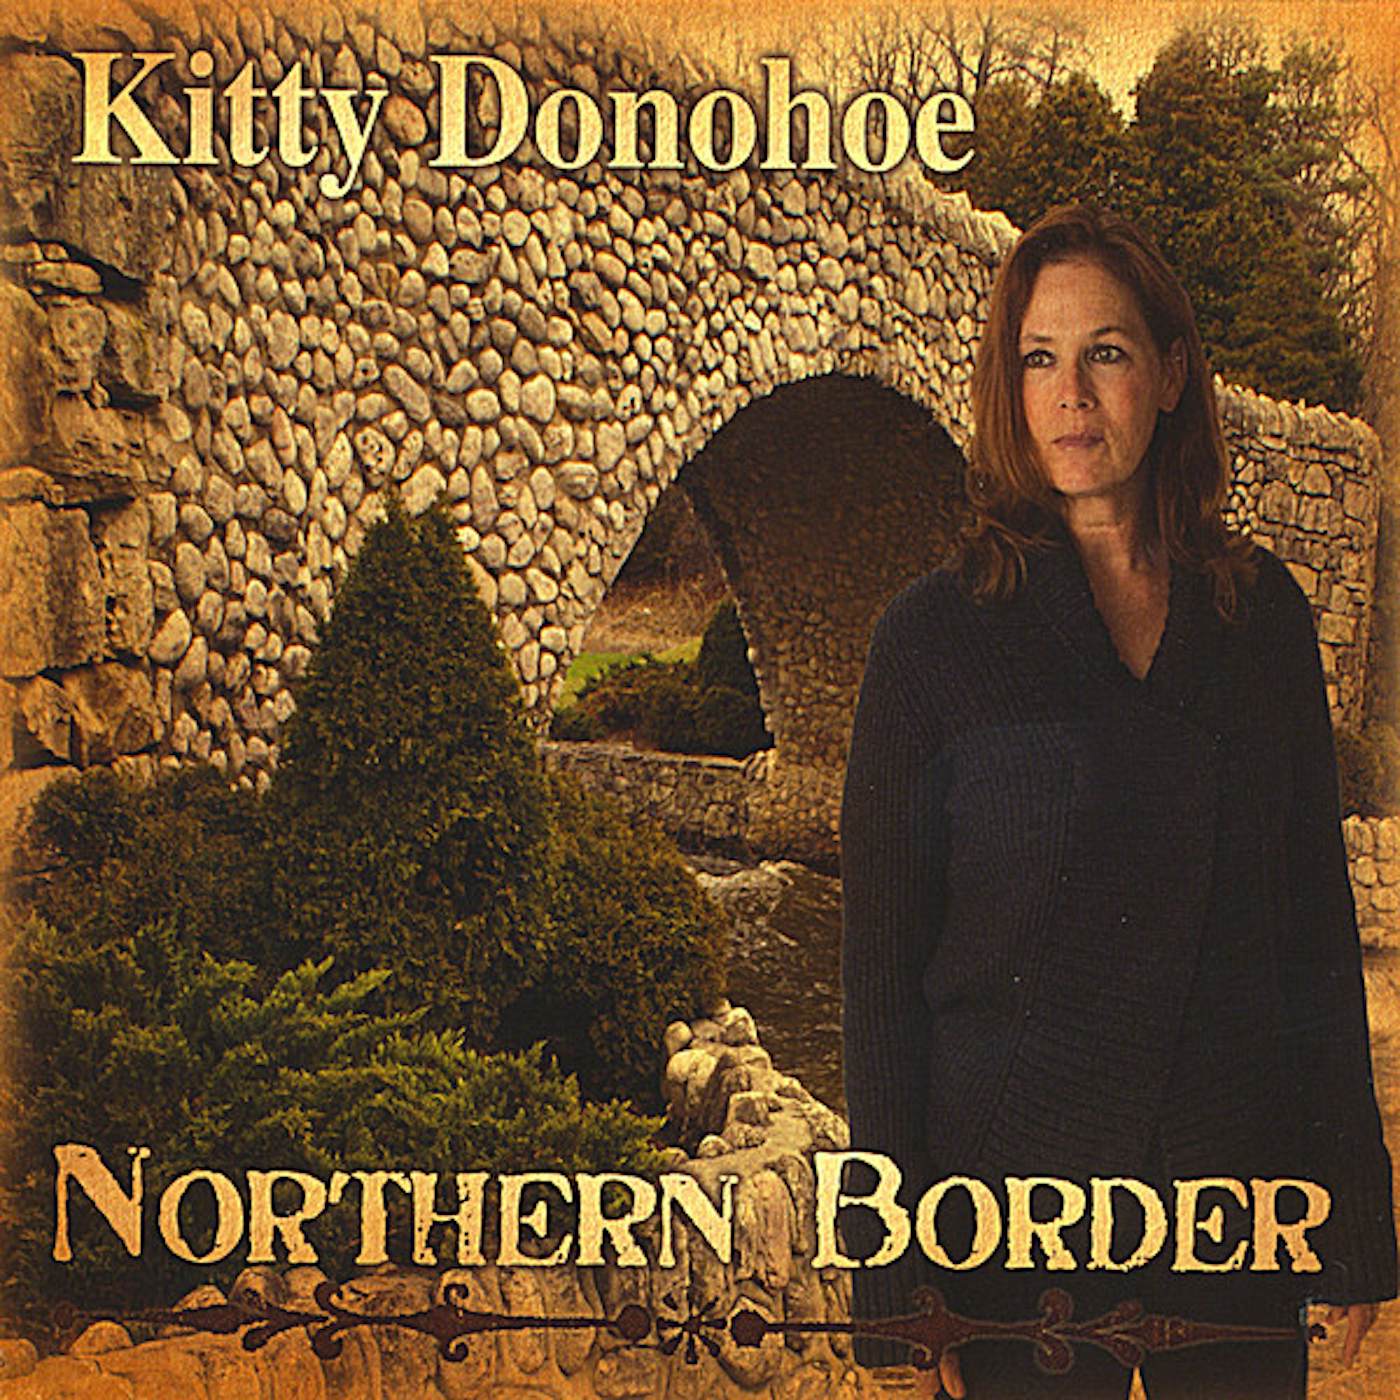 Kitty Donohoe NORTHERN BORDER CD